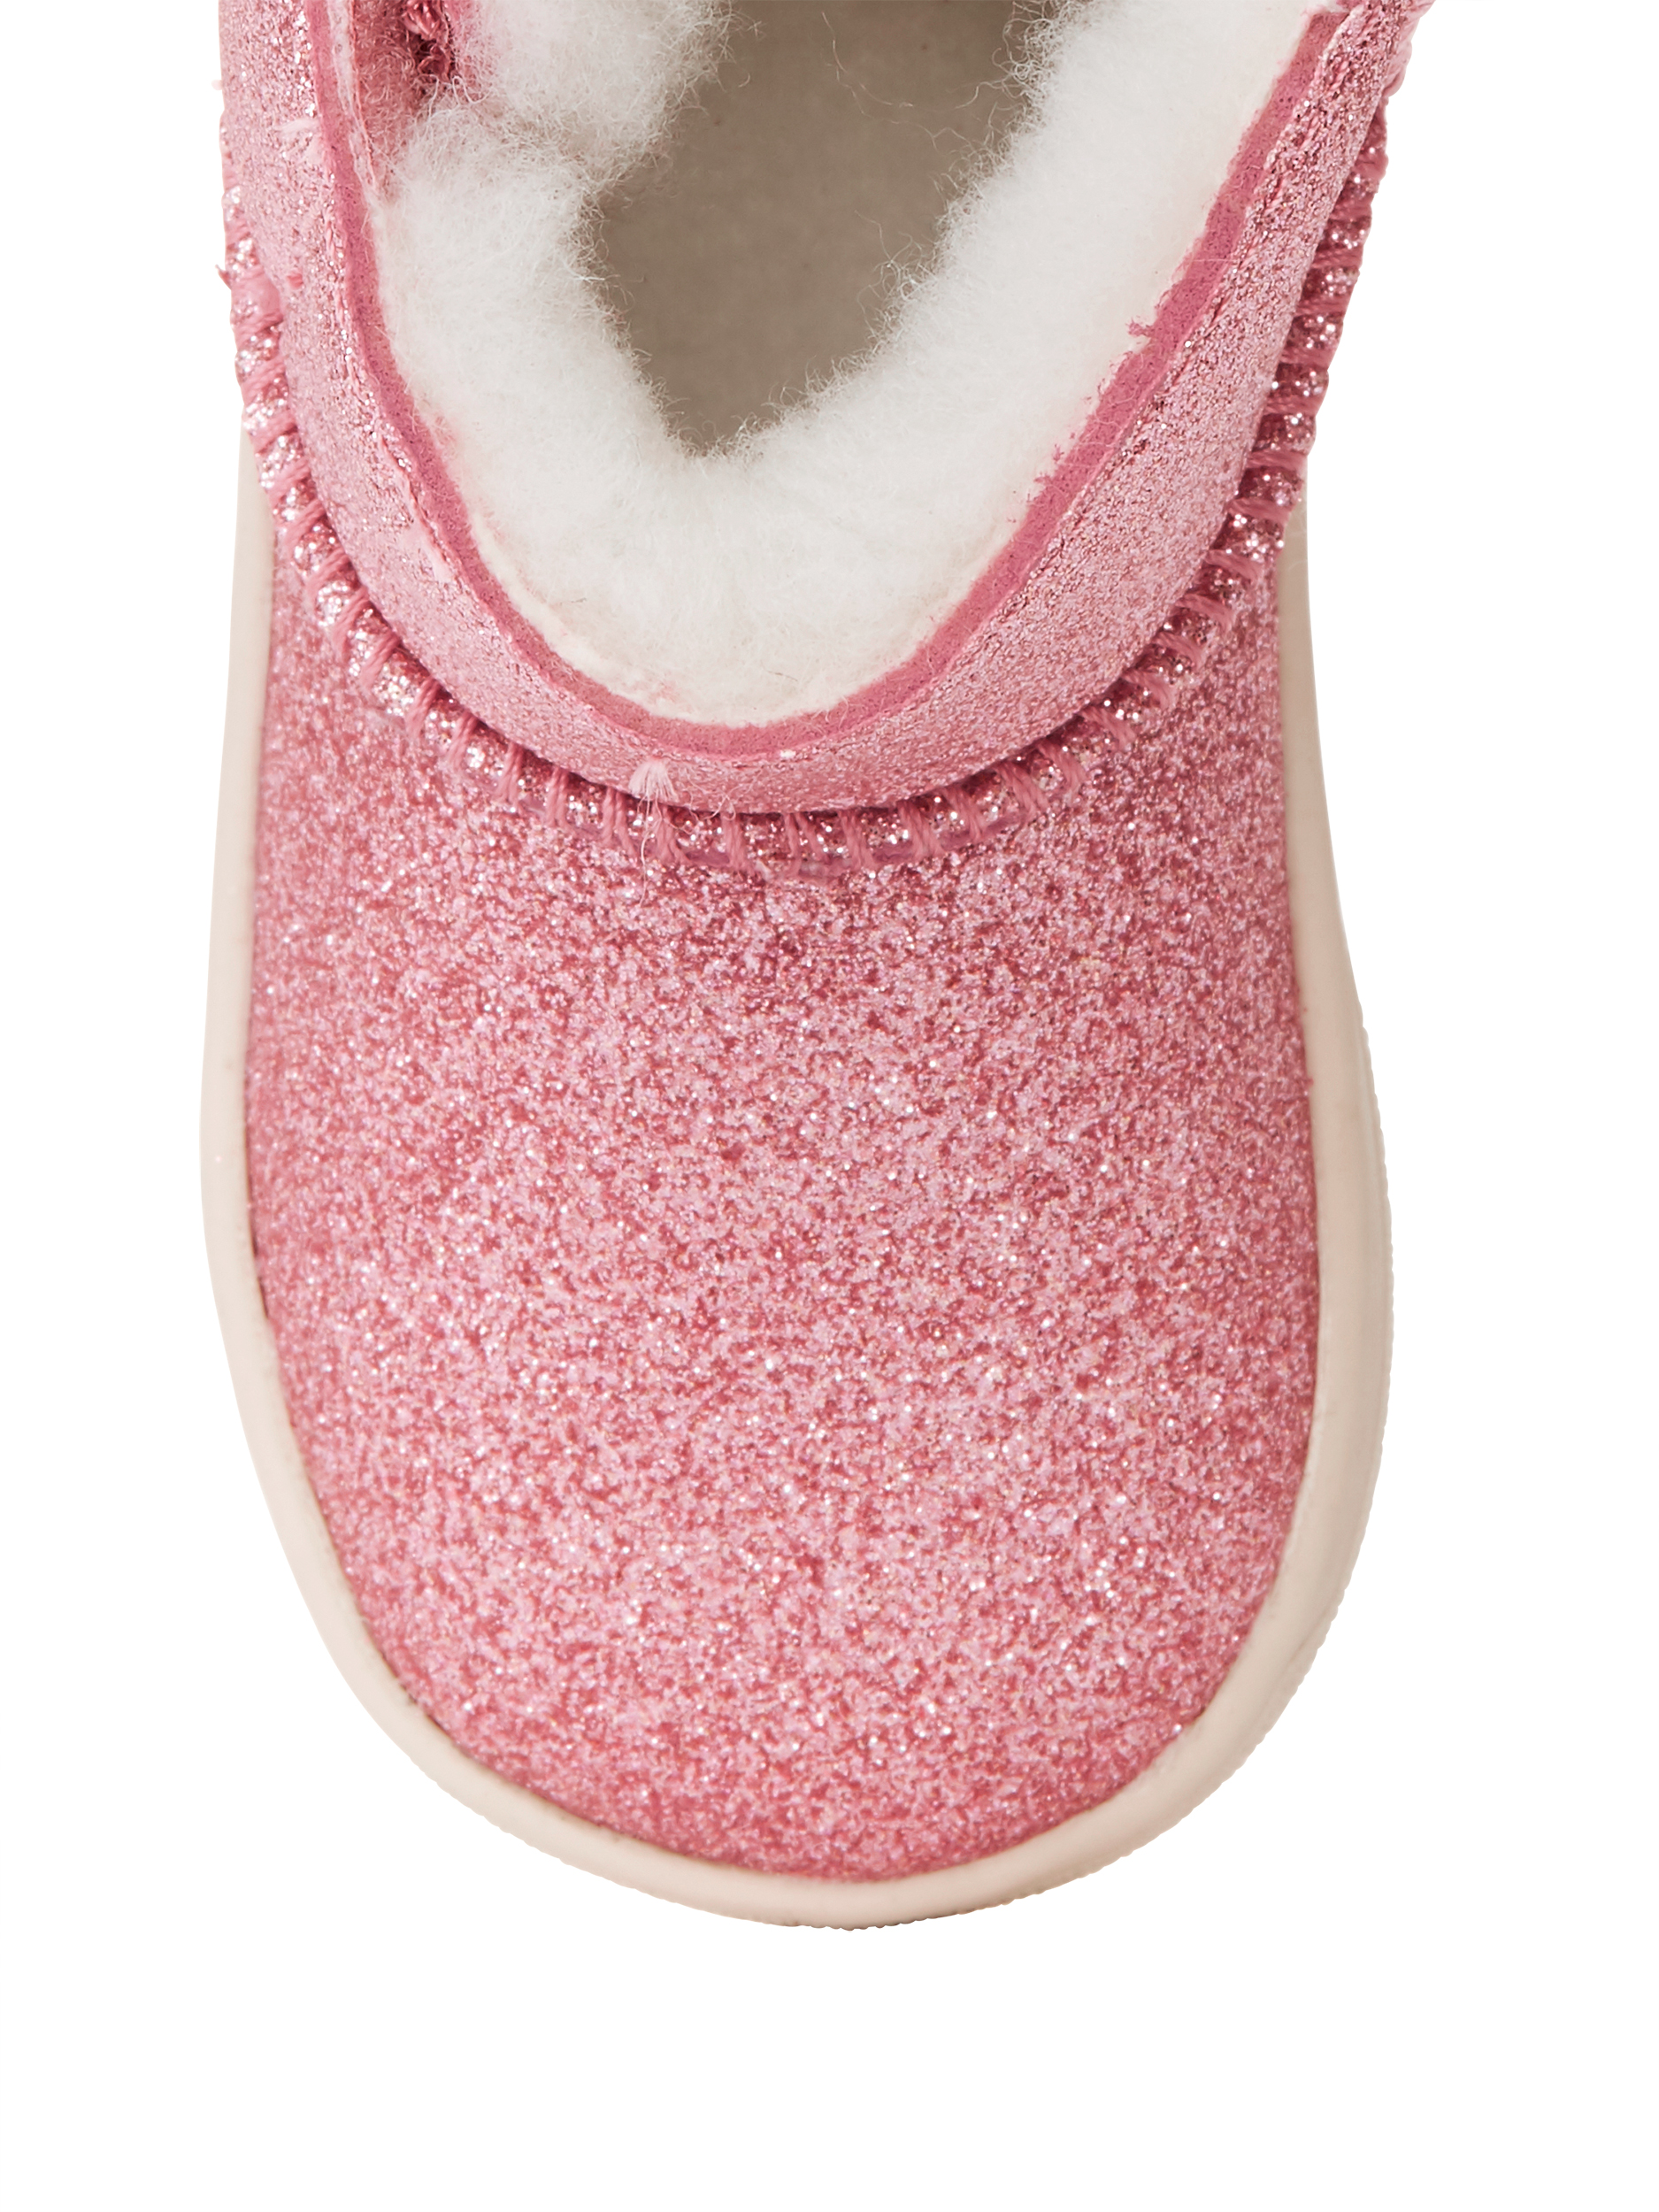 Wonder Nation Sparkly Faux Fur Boots (Infant Girls) - image 2 of 6